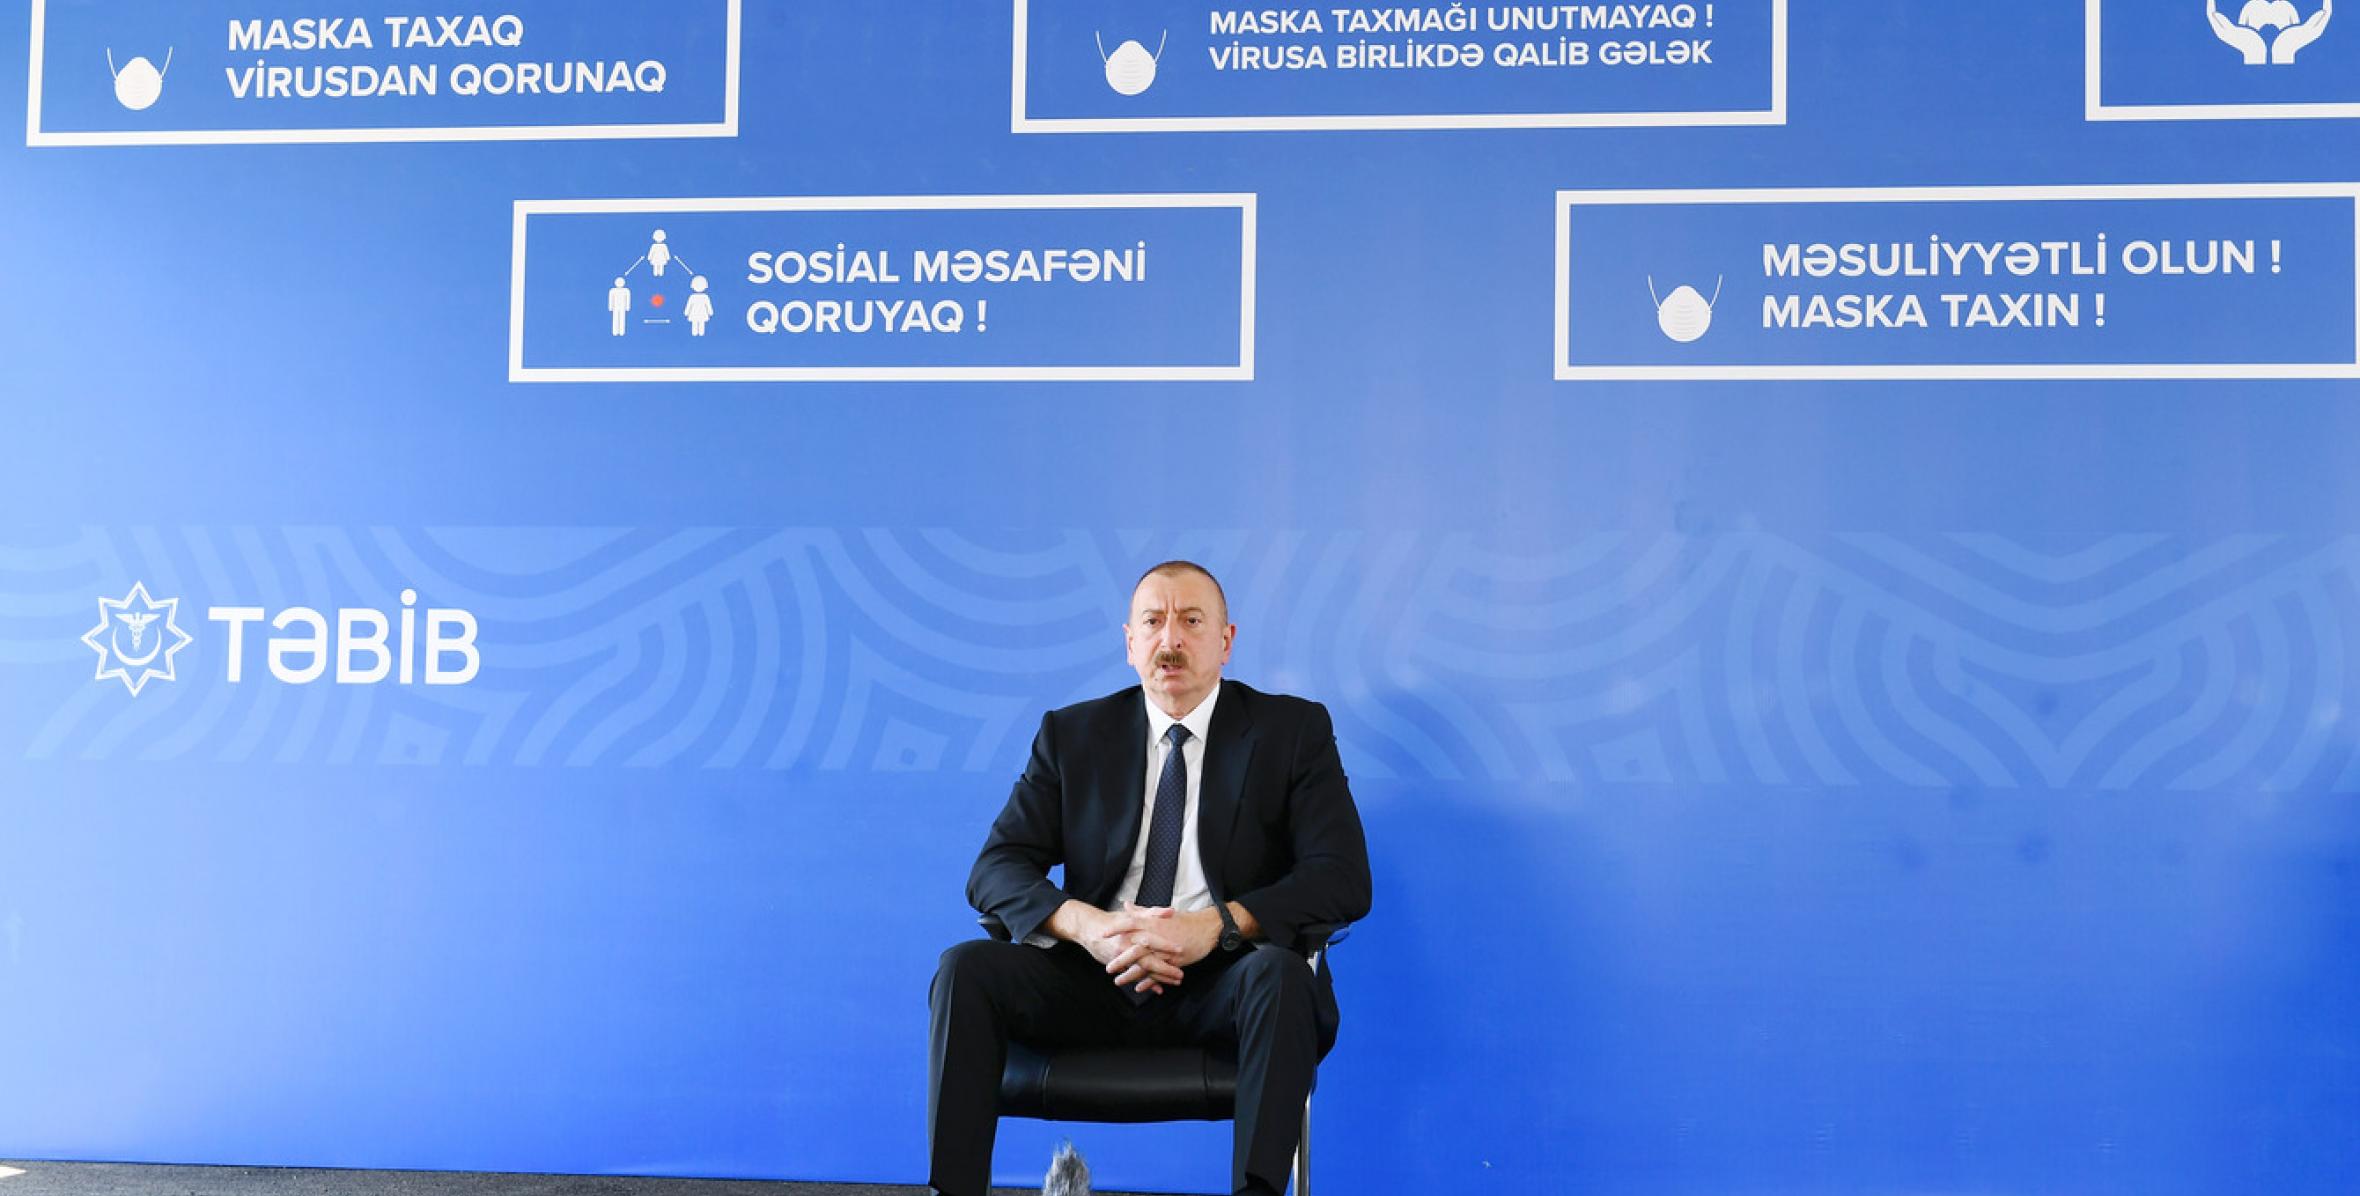 Speech by Ilham Aliyev at the opening of modular hospital in Ganja